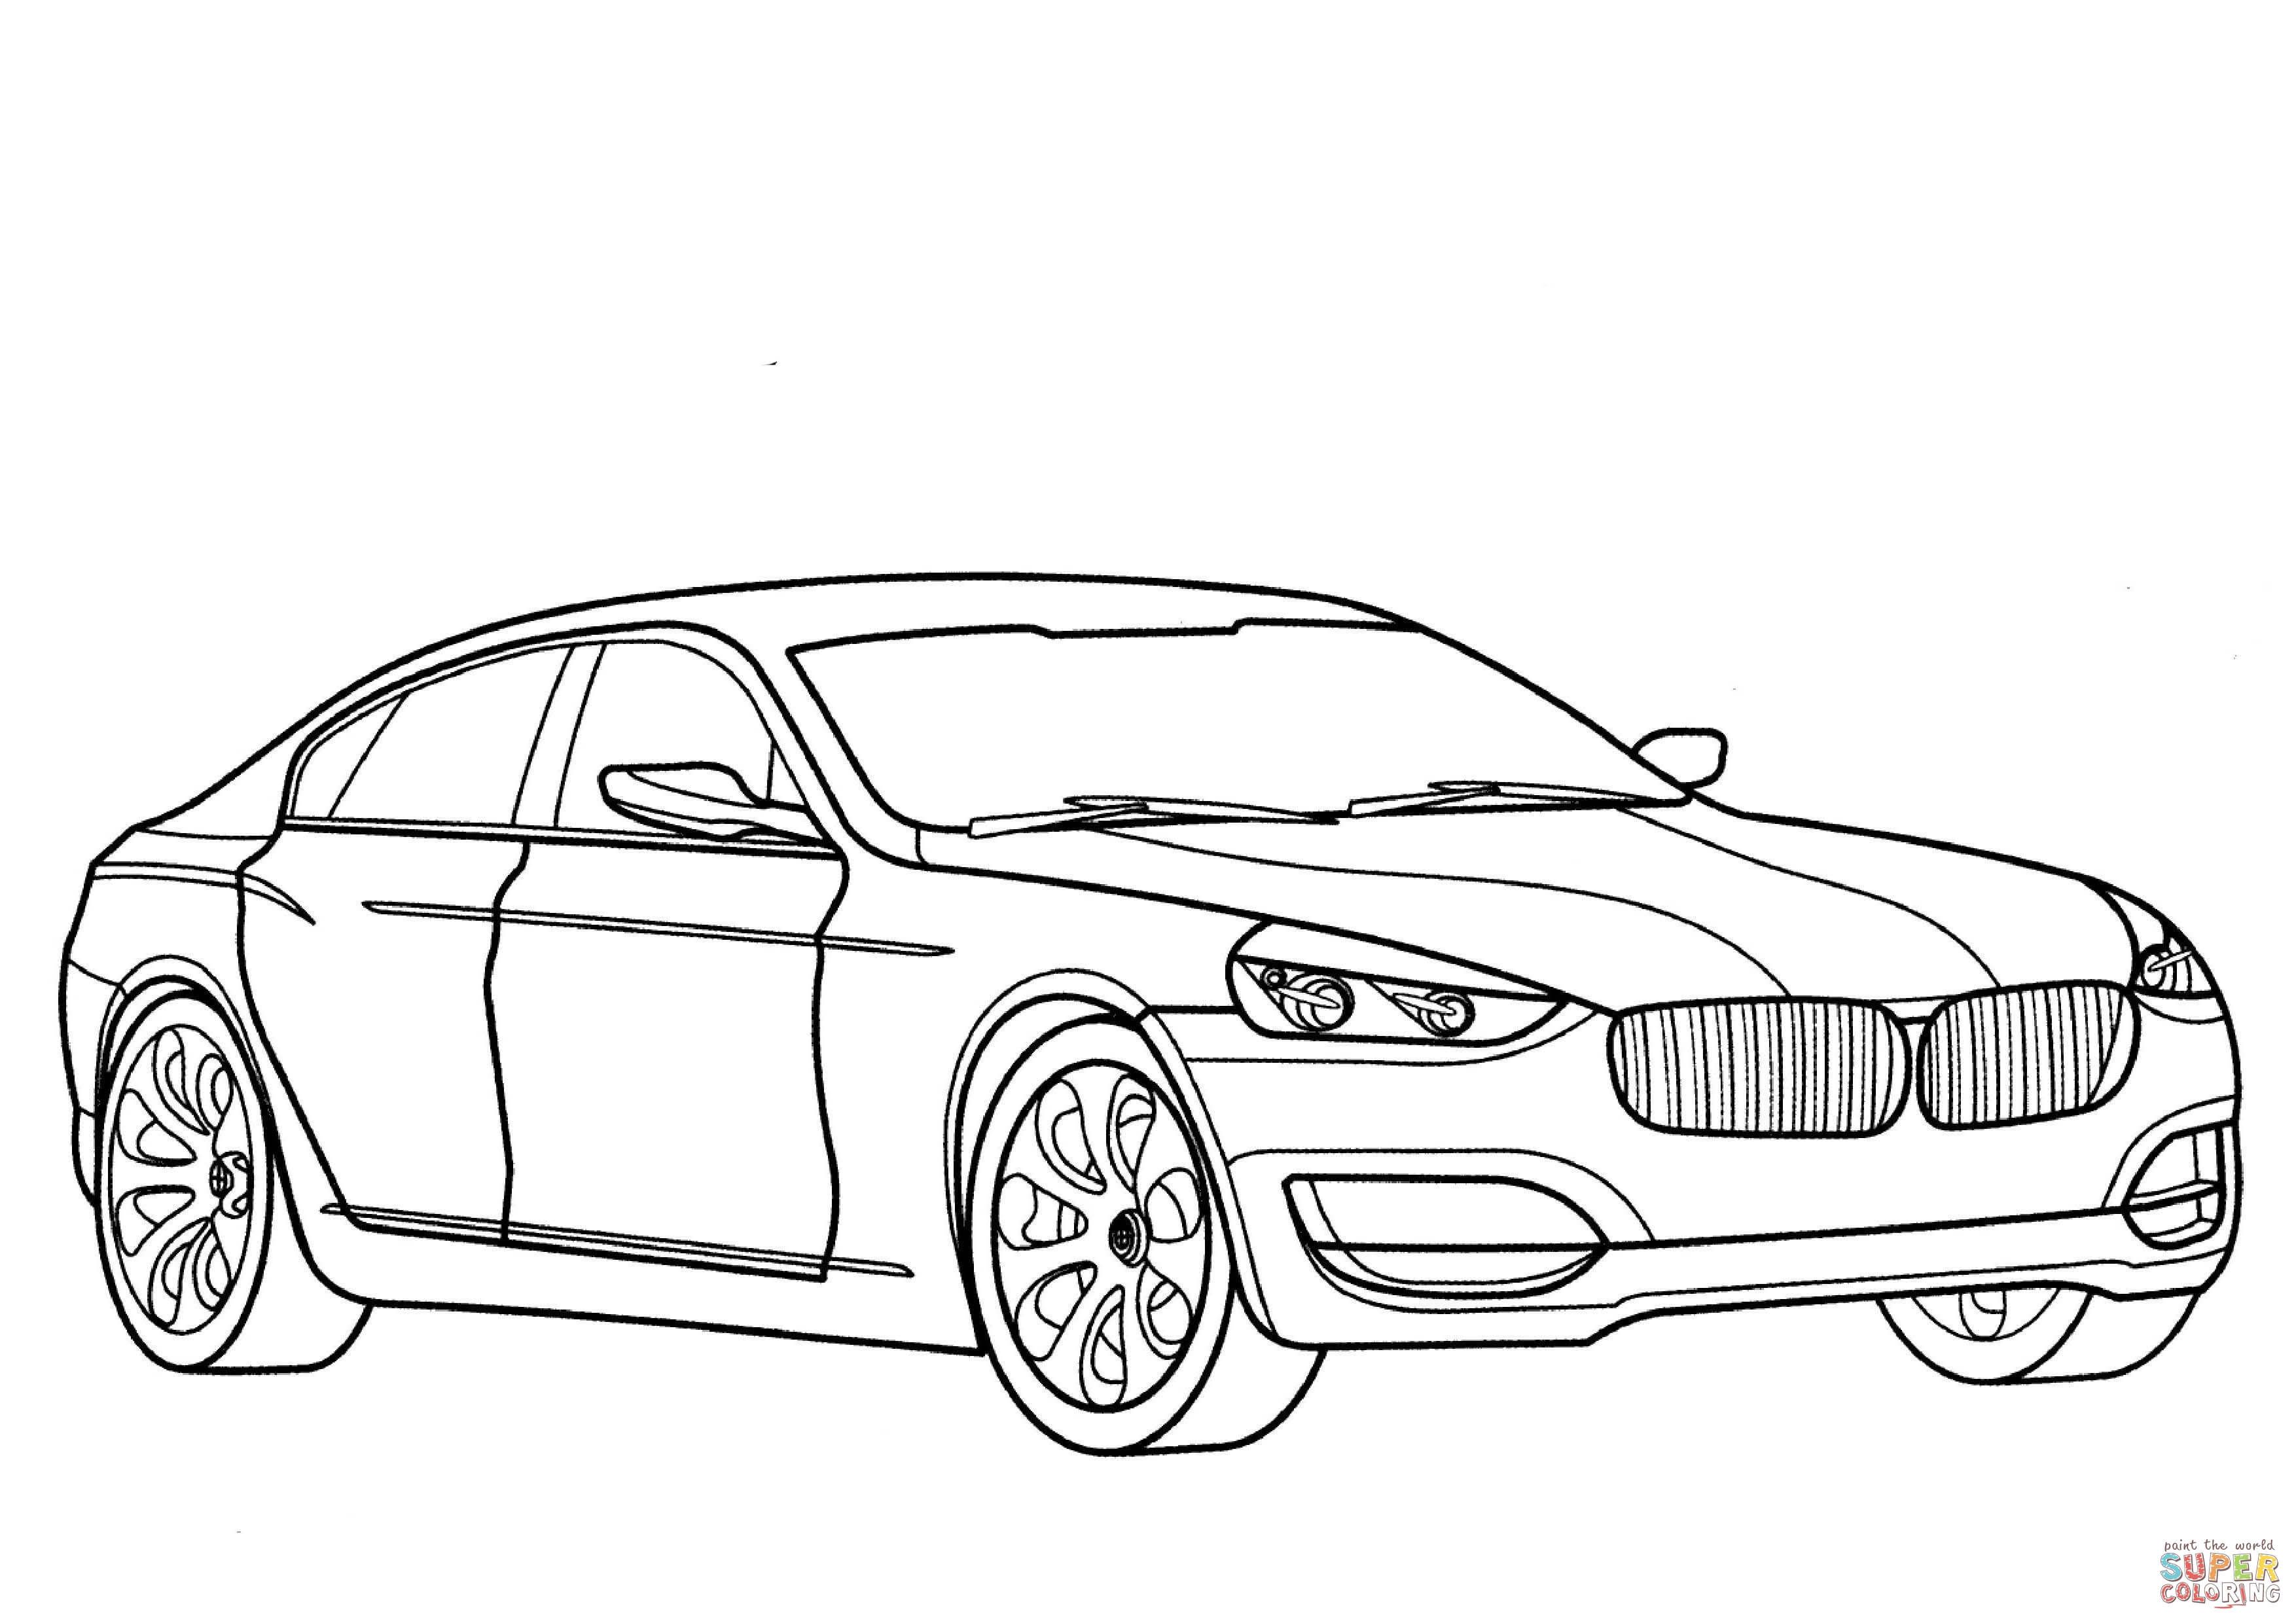 BMW 3 Series GT coloring page | Free Printable Coloring Pages | Cars coloring  pages, Audi q7, Bmw 3 series